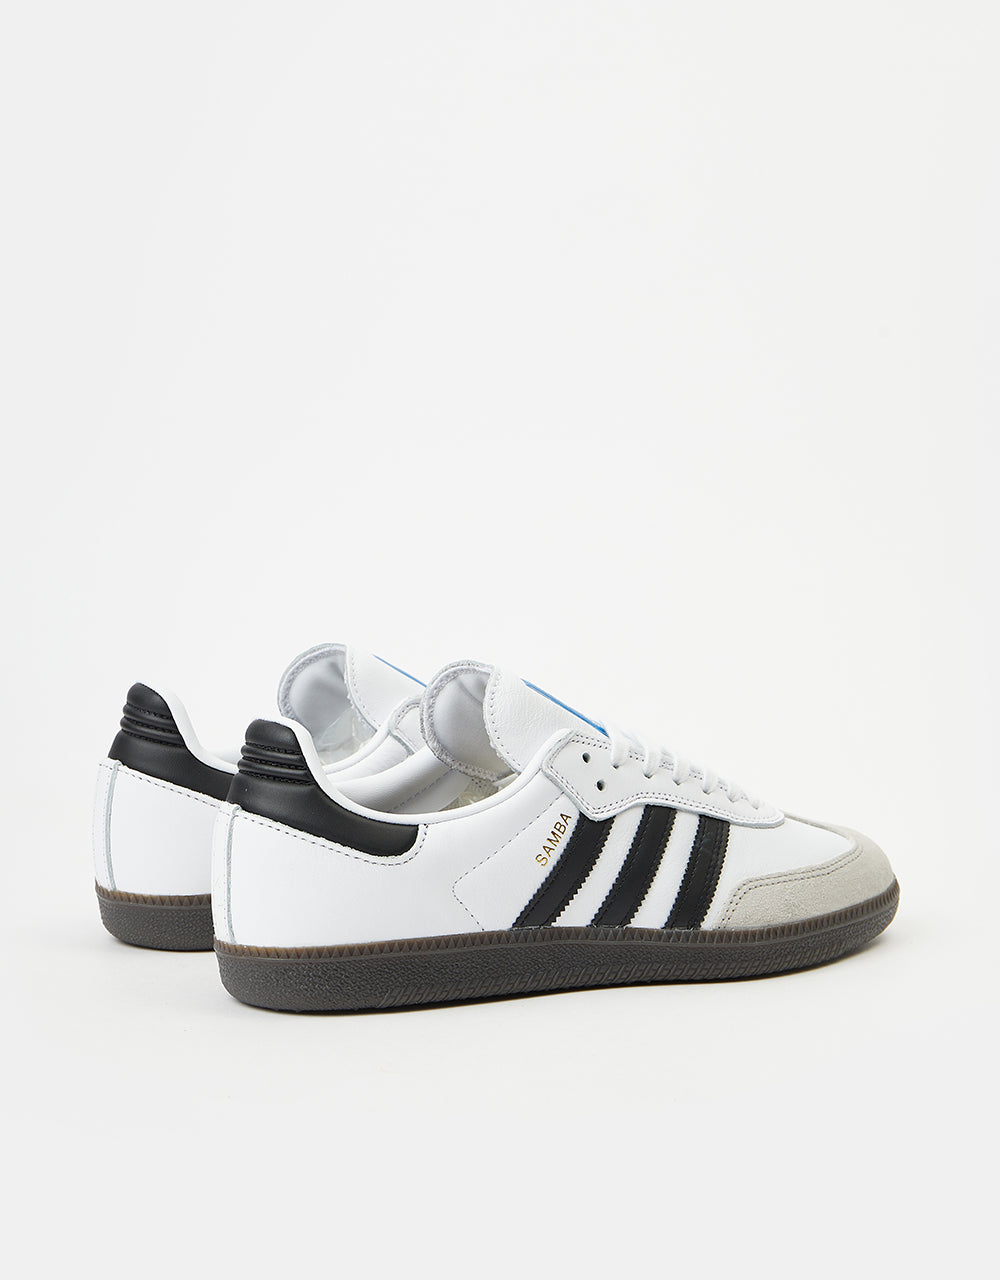 adidas Samba ADV Skate Shoes - White/Core Black/Gum